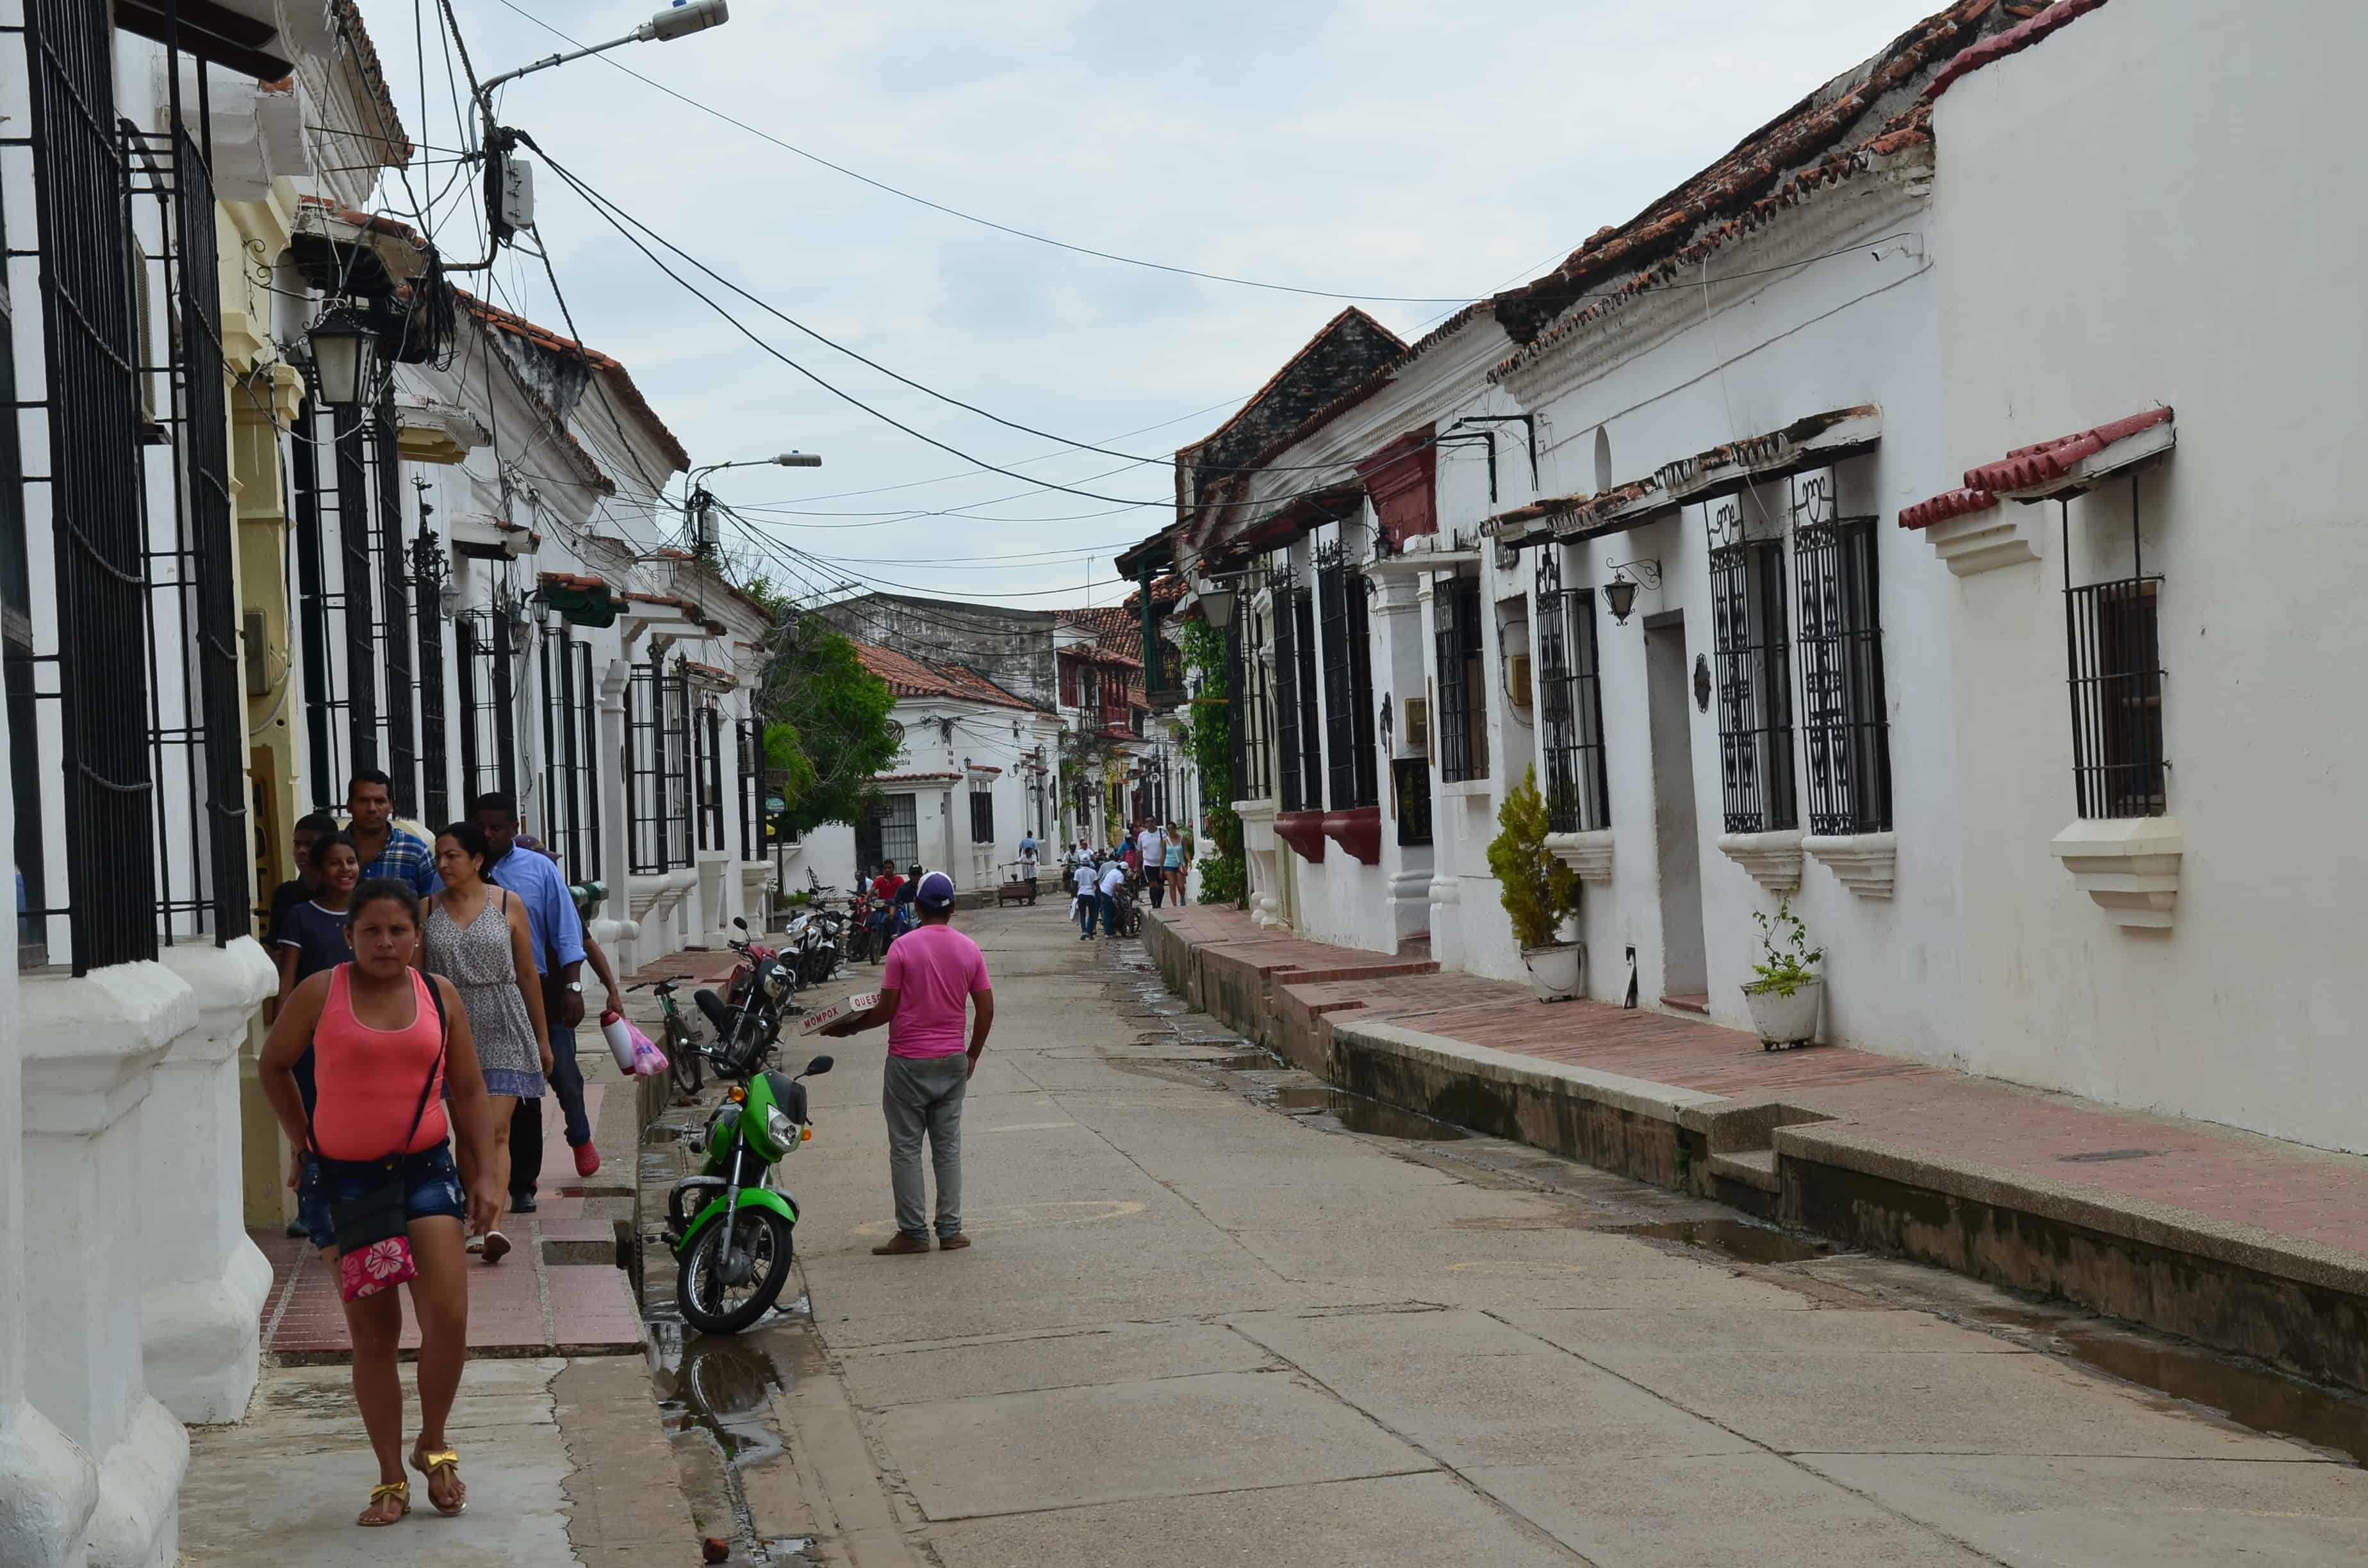 Calle del Medio in Mompox, Bolívar, Colombia